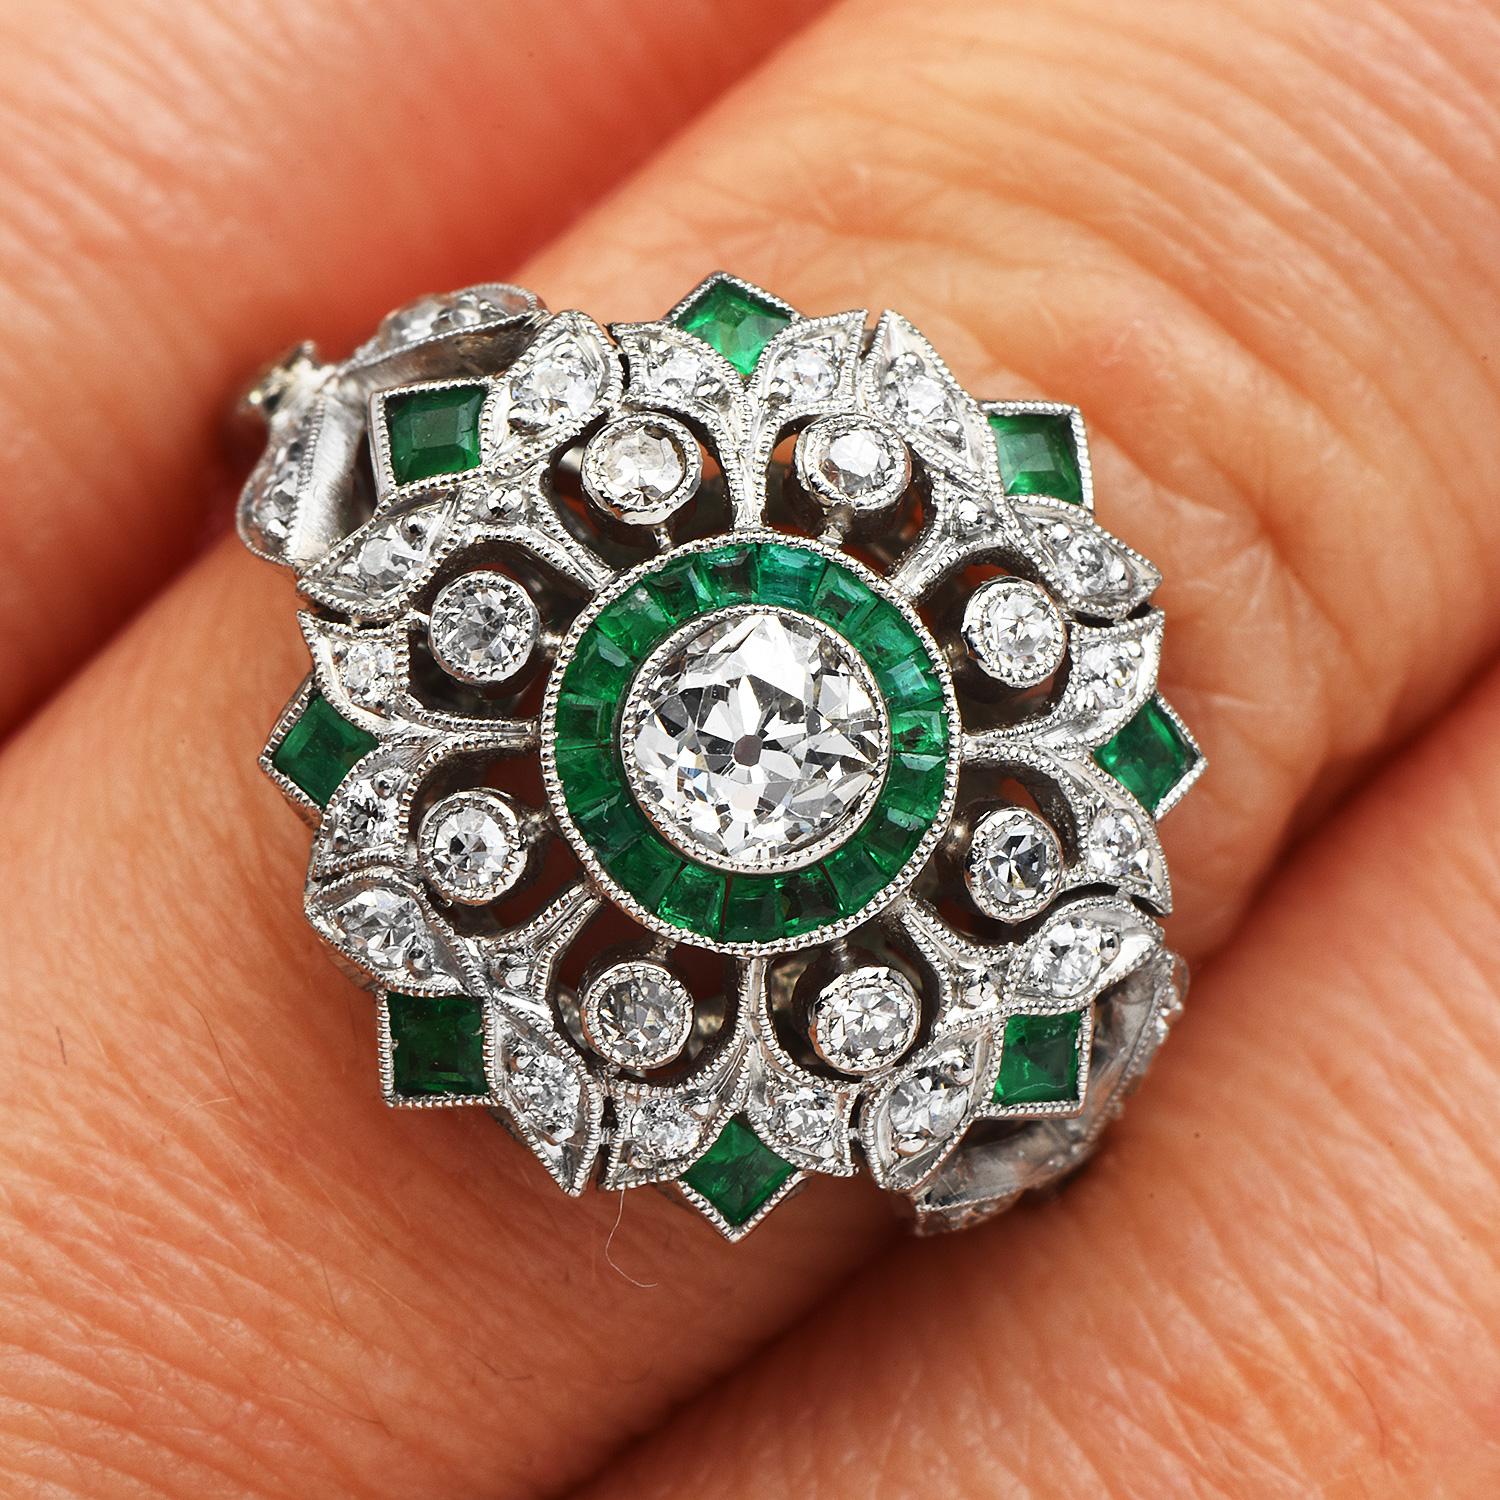 Old European Cut Art Deco Style Old European Diamond Emerald Cocktail Ring